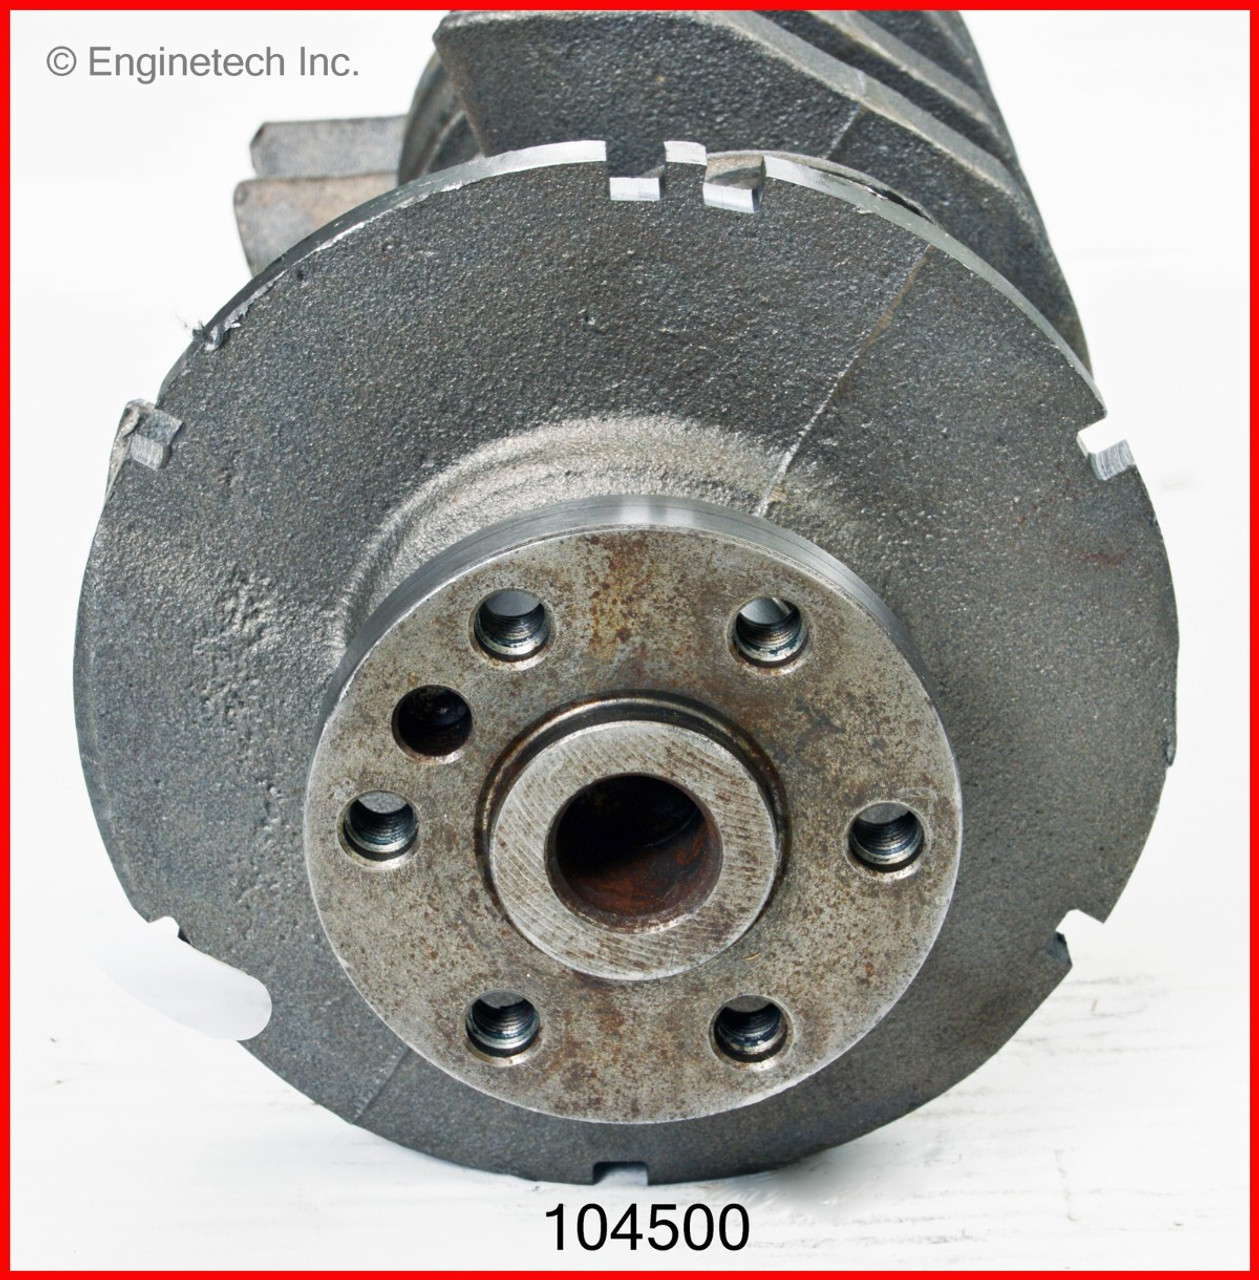 2002 Chevrolet Cavalier 2.2L Engine Crankshaft Kit 104500 -7